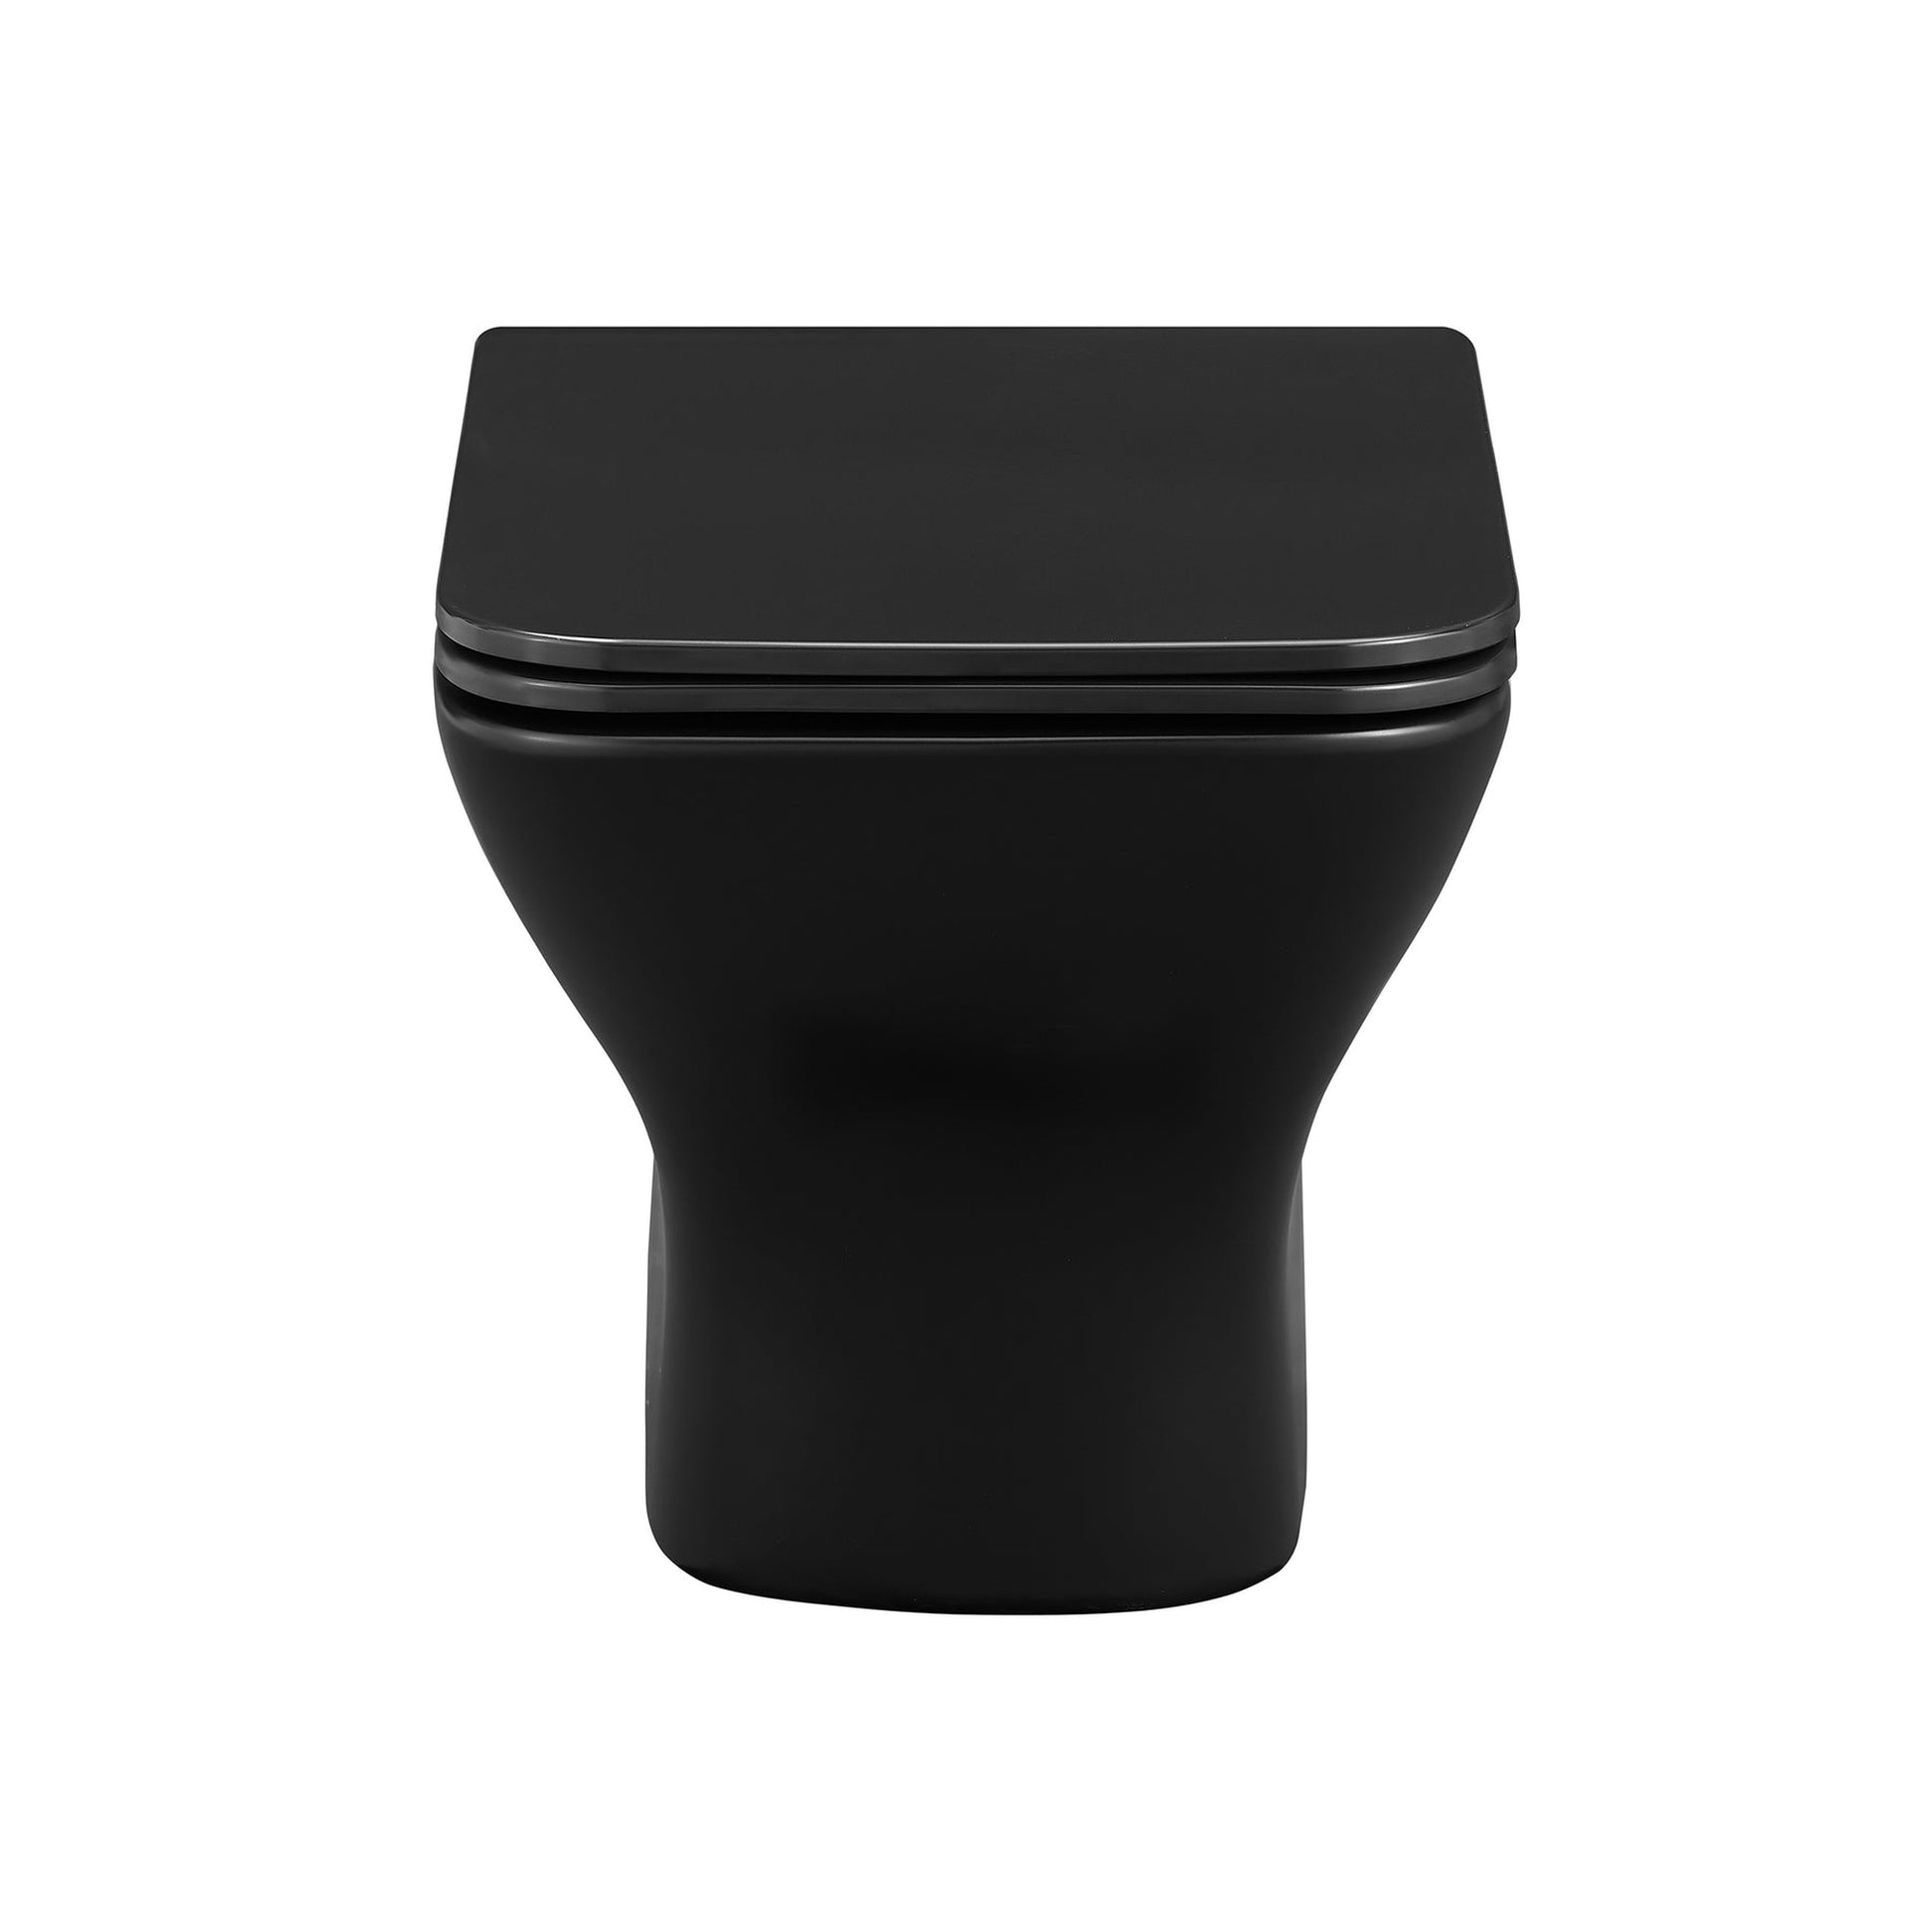 Swiss Madison Carré 14" x 15" Matte Black Elongated Square Wall-Hung Toilet Bowl